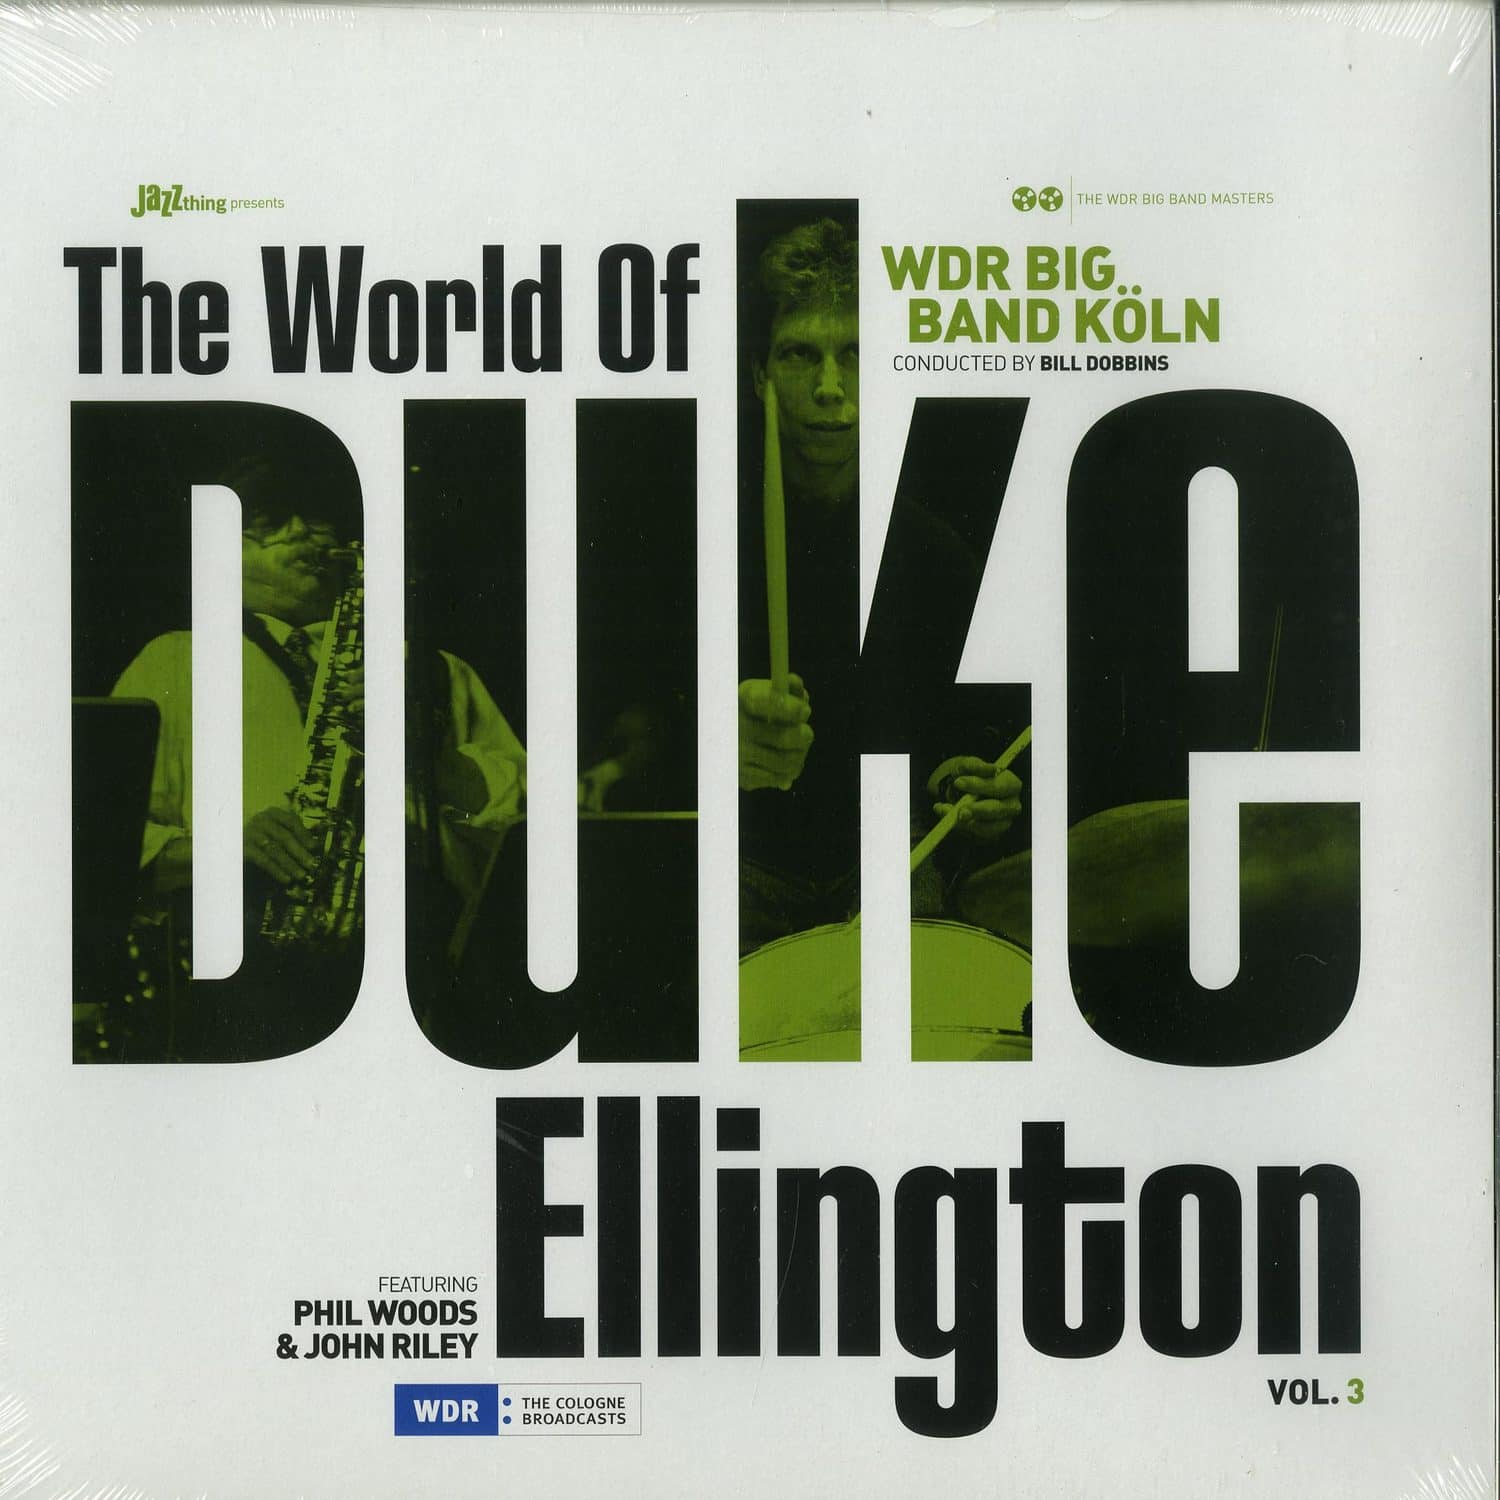 WDR Big Band Kln - THE WORLD OF DUKE ELLINGTON PART 3 